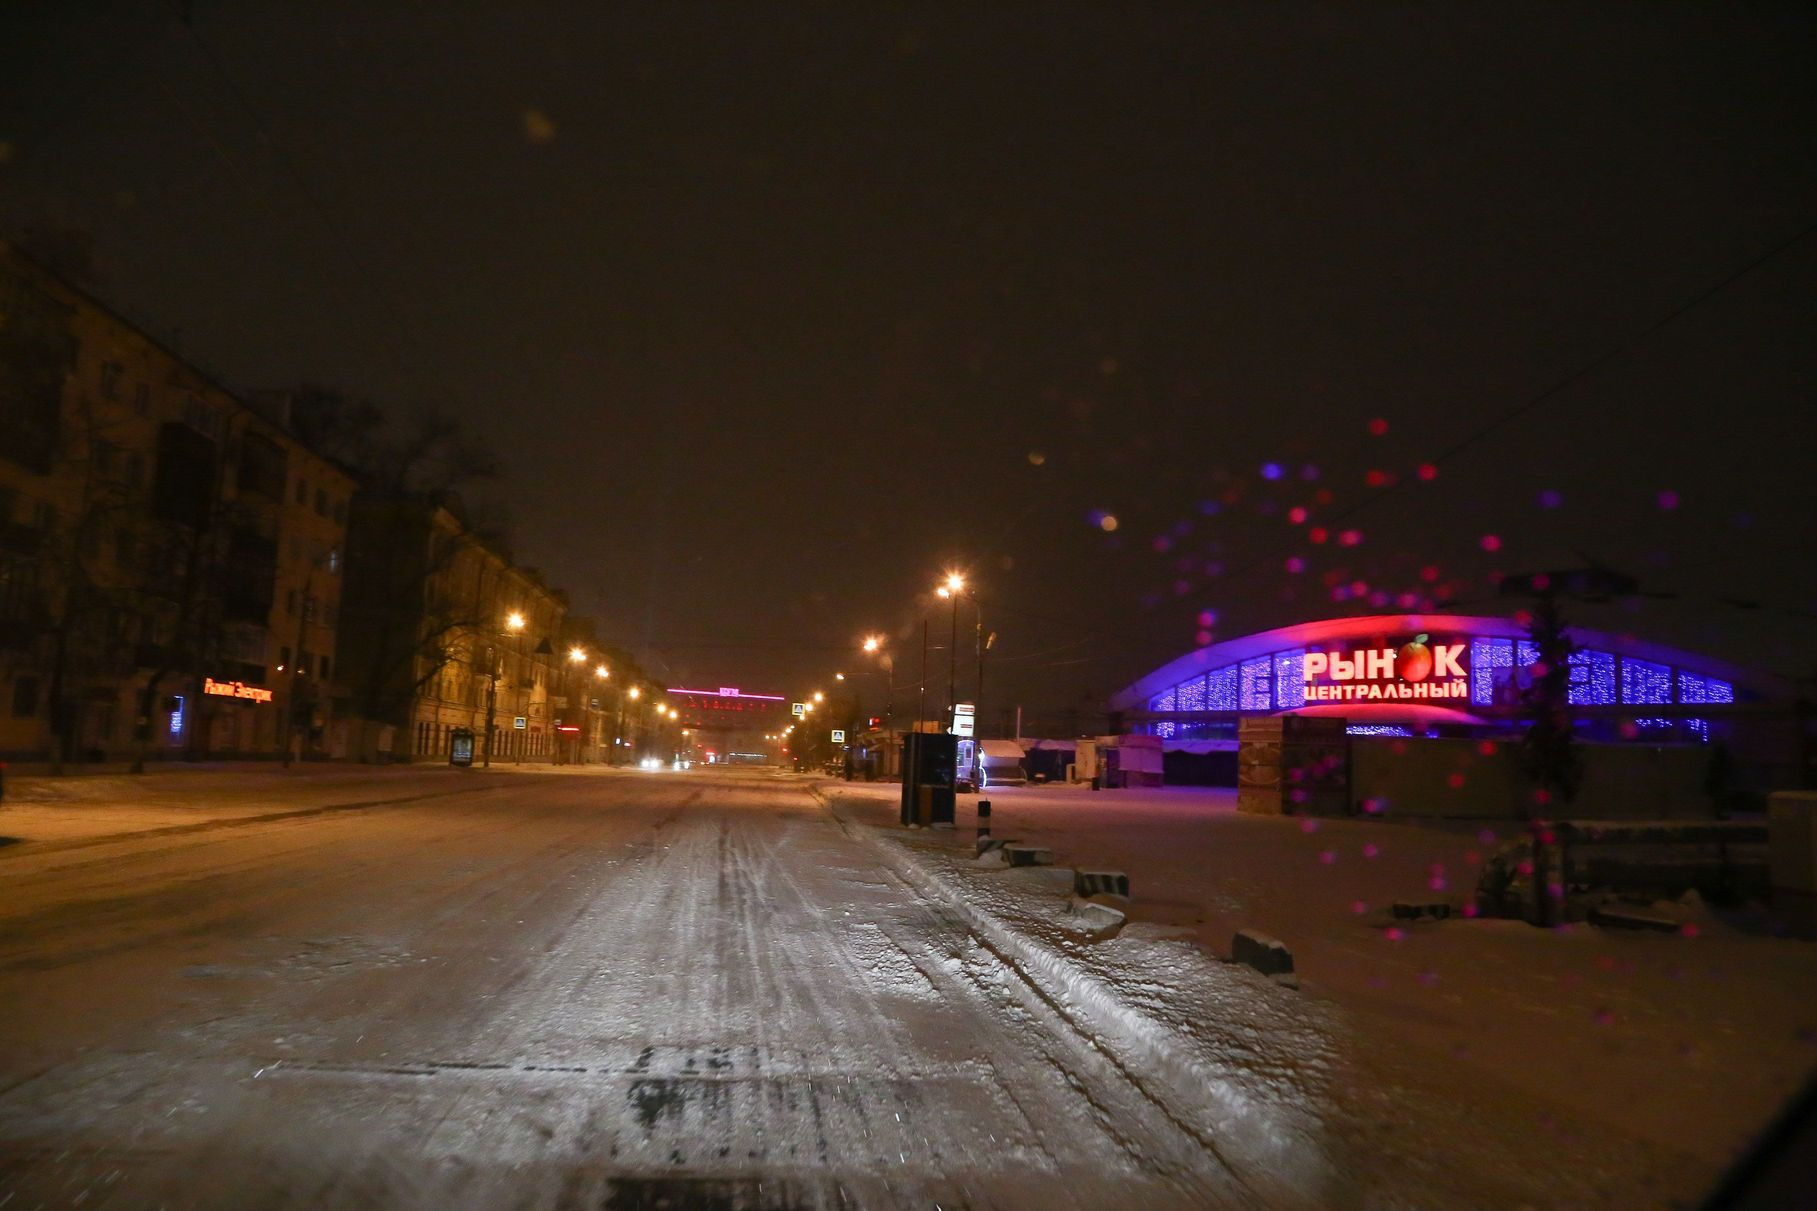 Ночной снежный Нижний Новгород